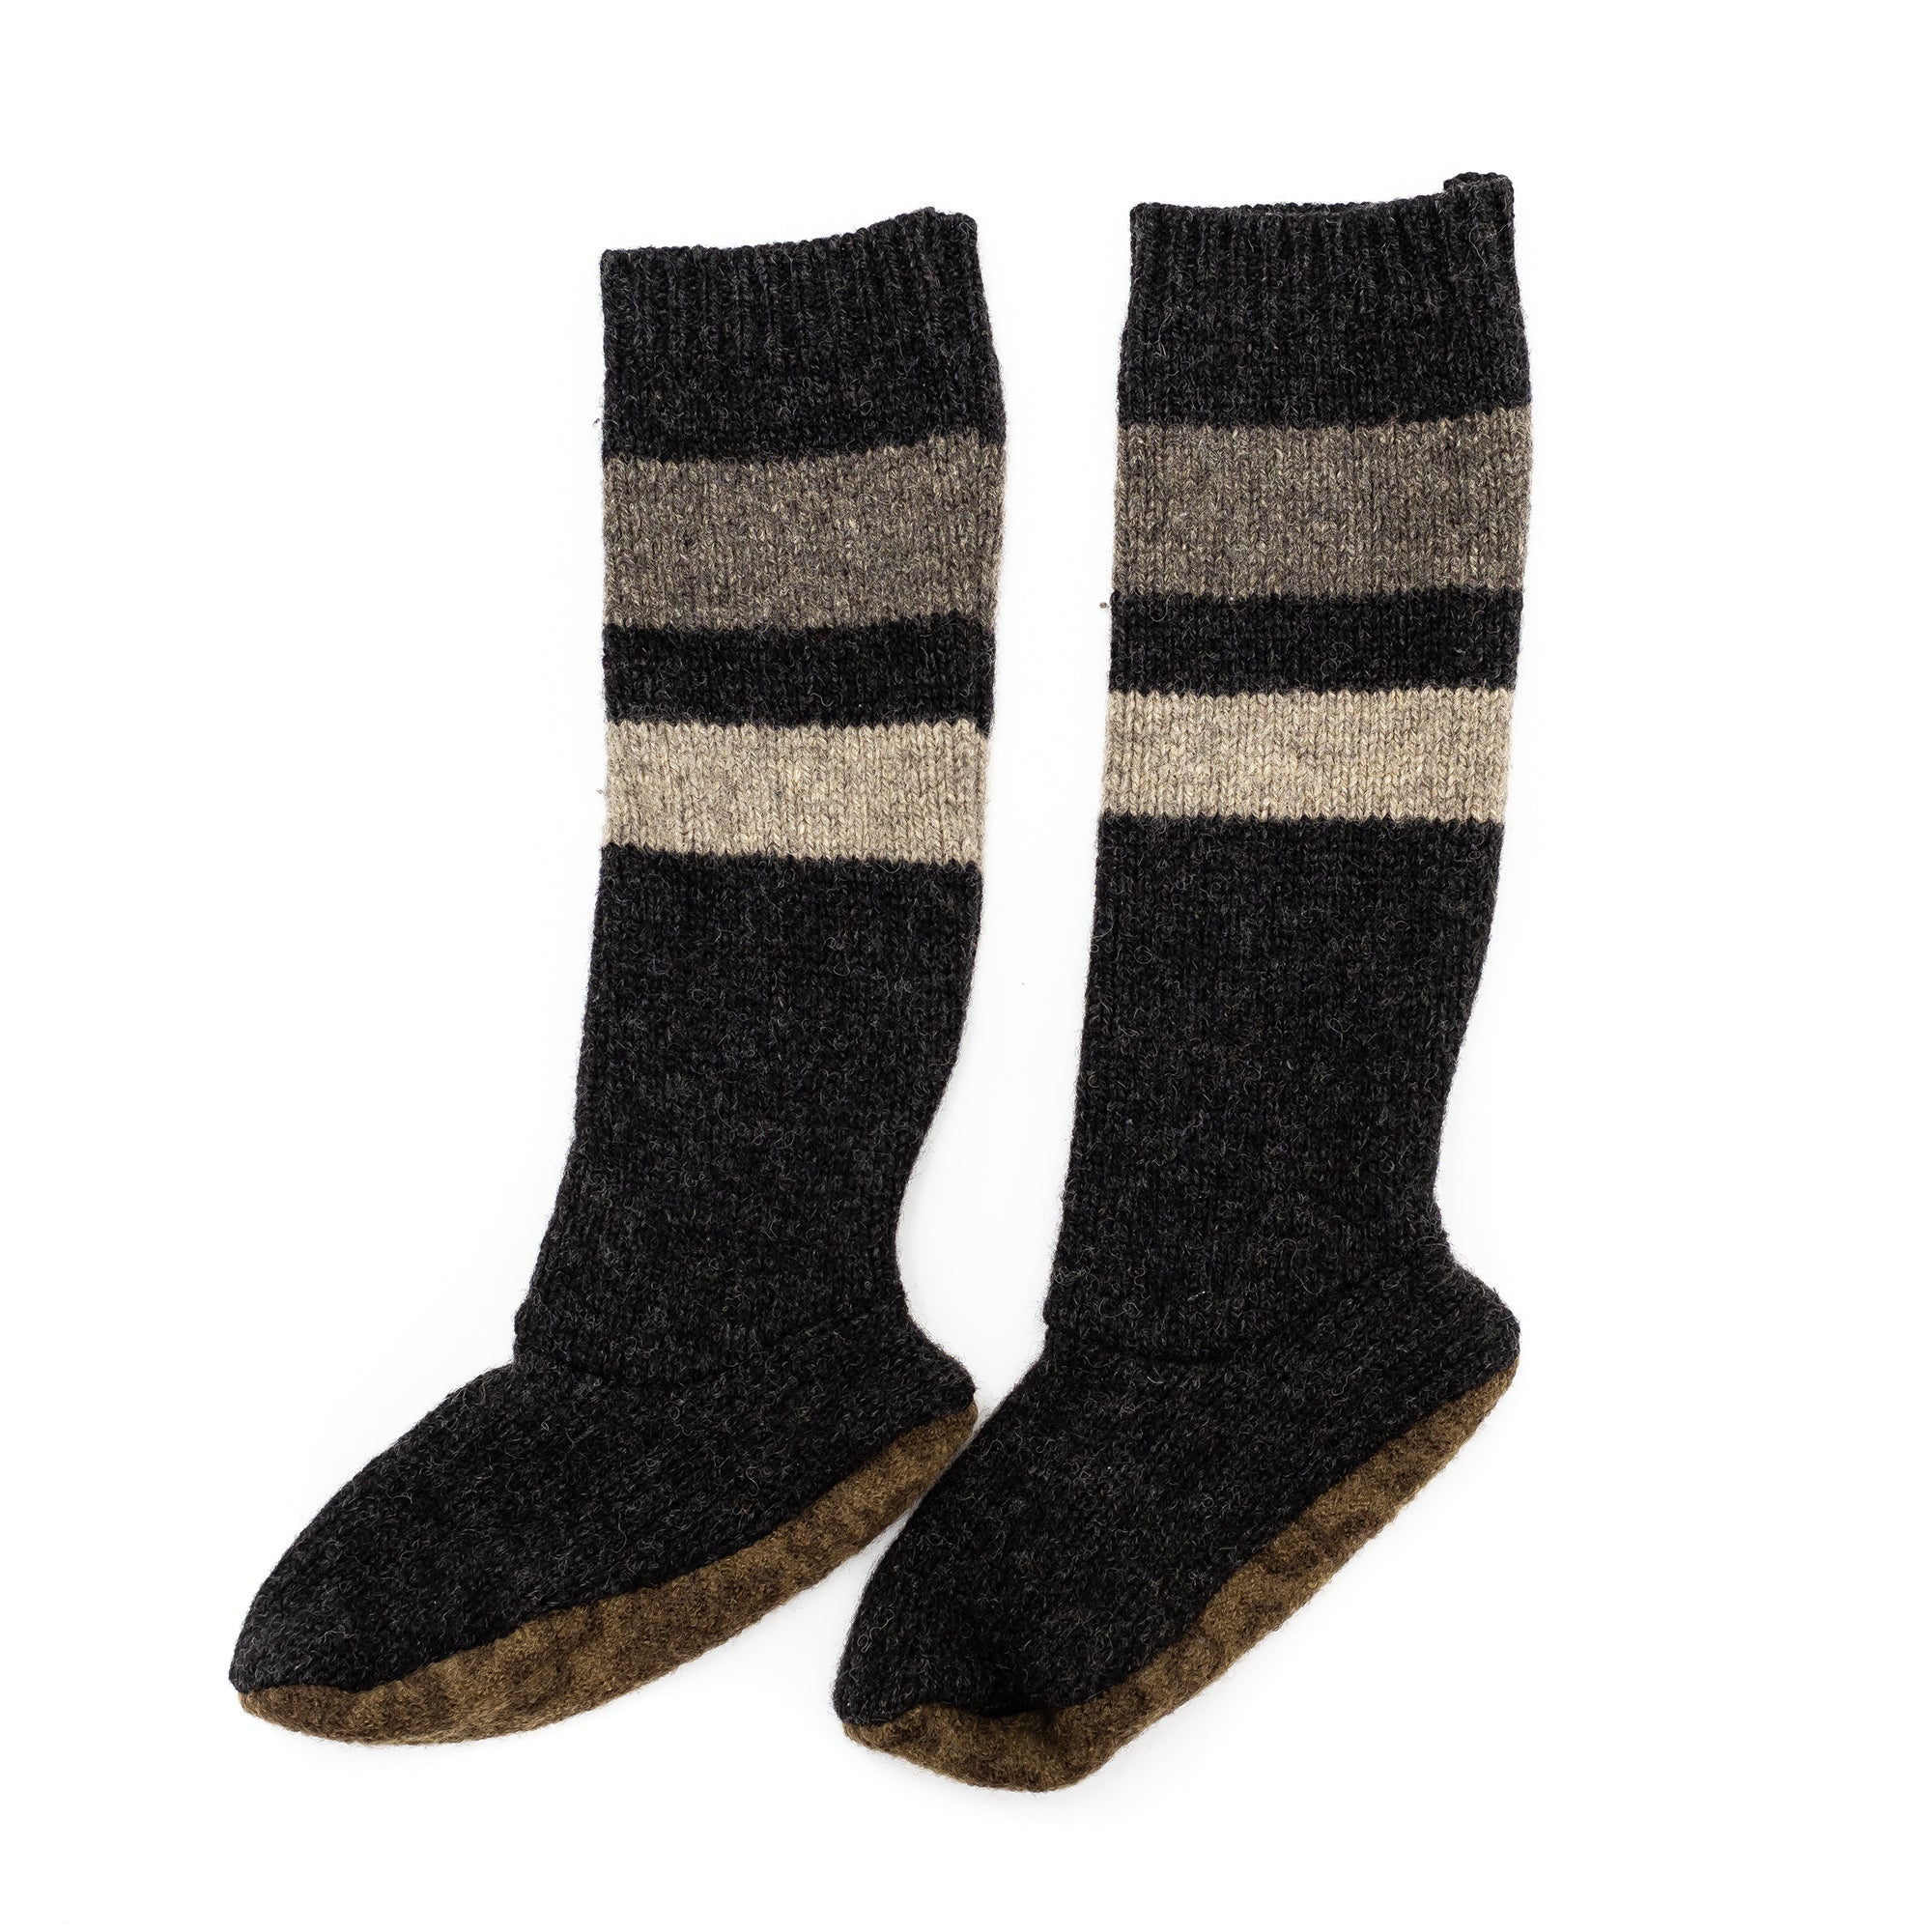 Wool Cabin Socks | Rugby Stripes | Size 8-11